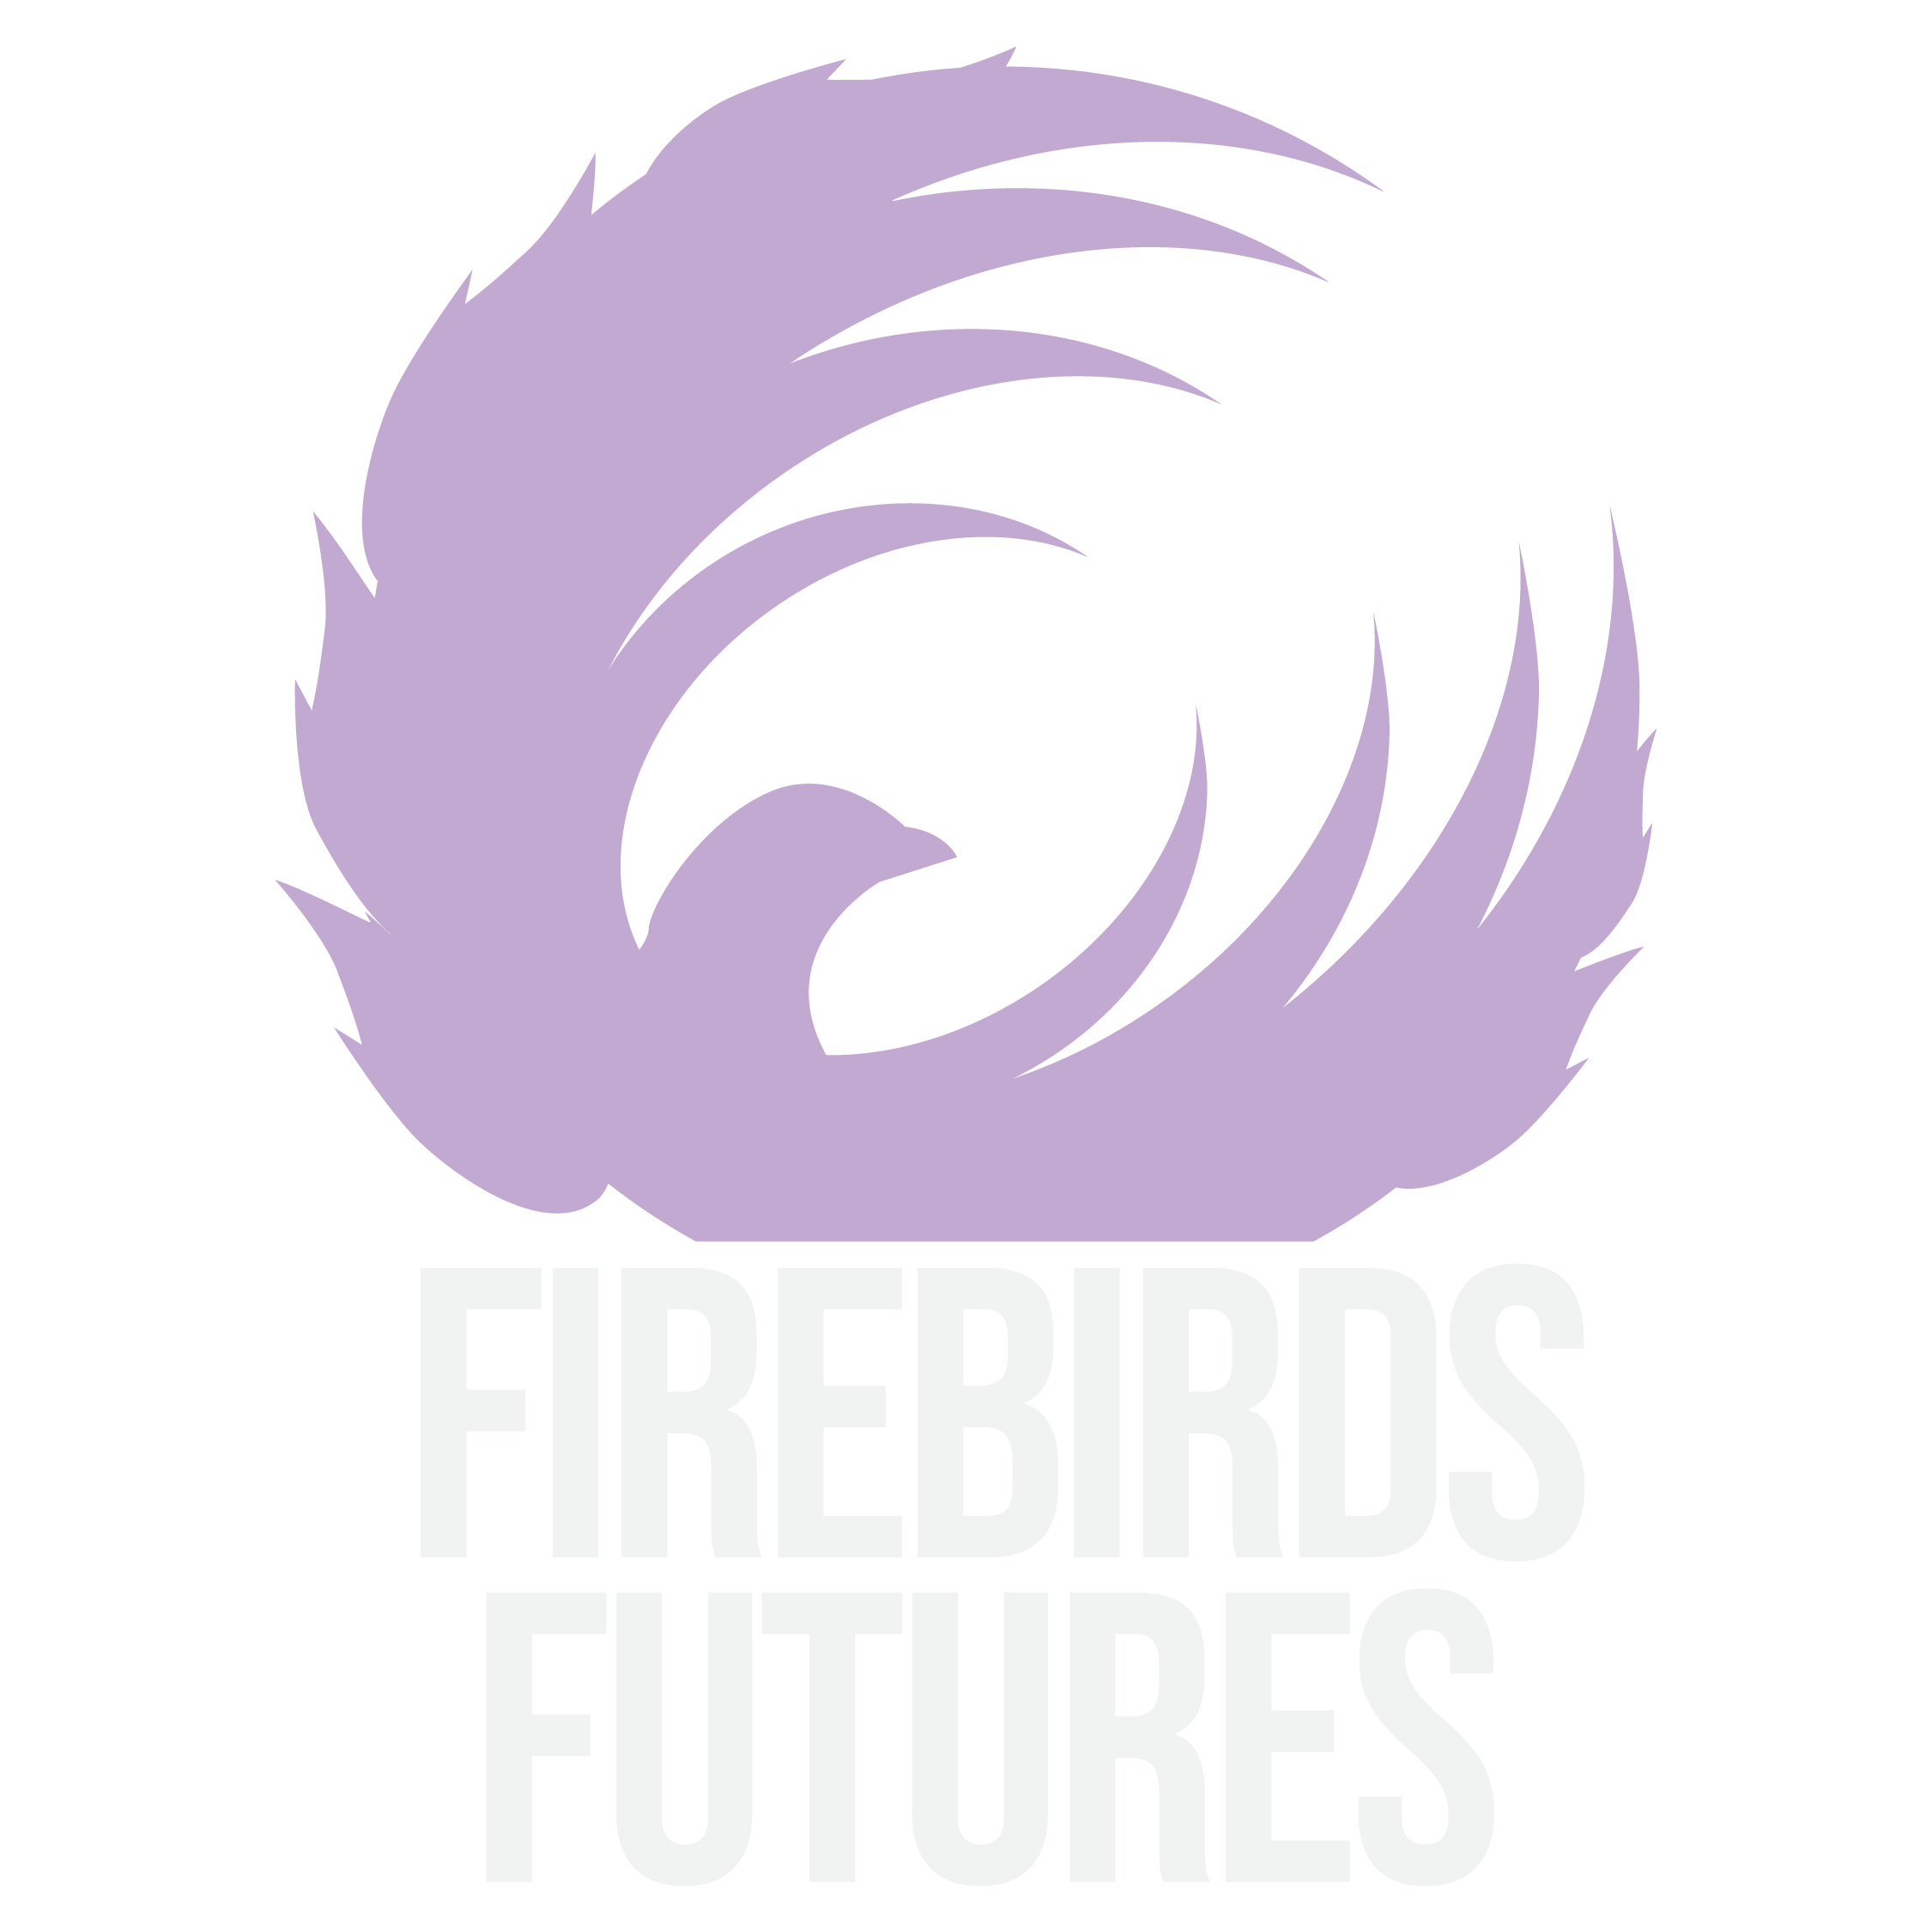 Firebirds Futures lilac logo